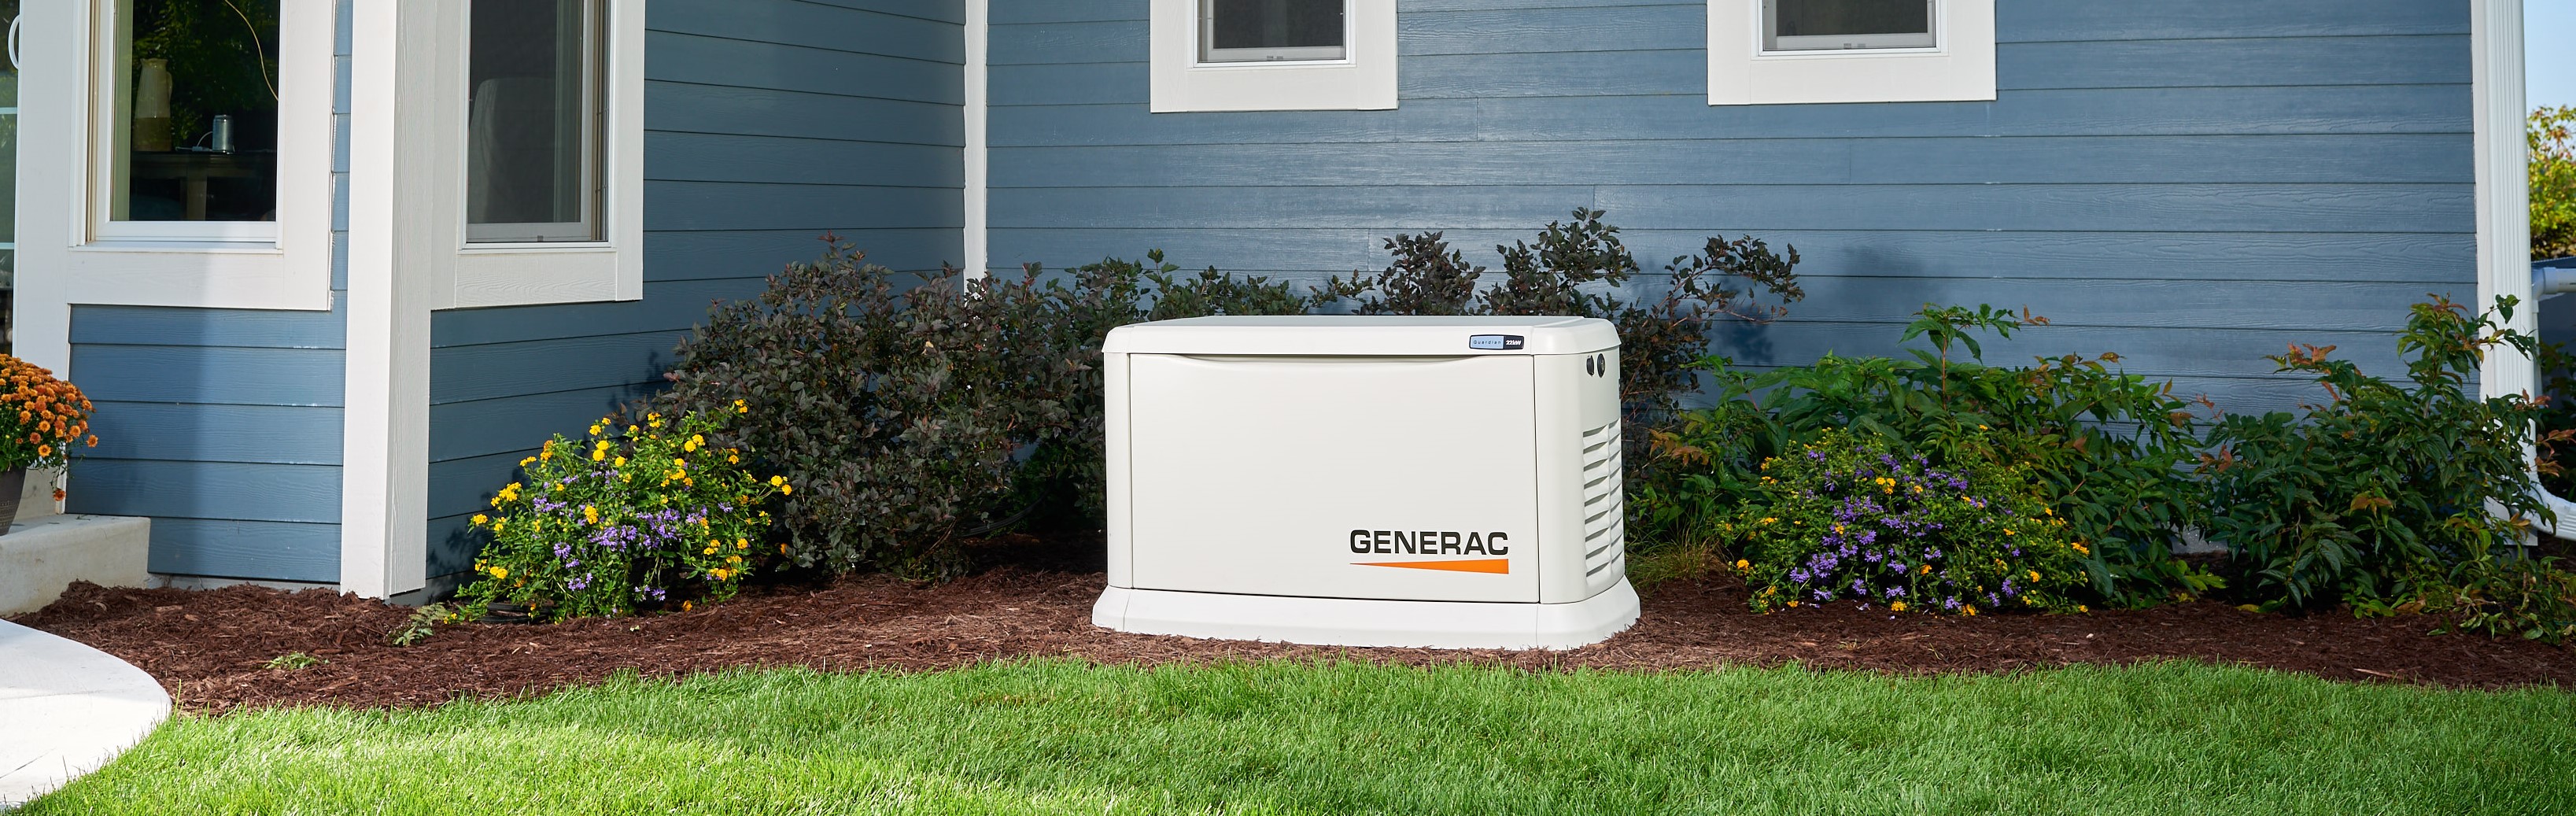 Generac Automatic Backup Generator